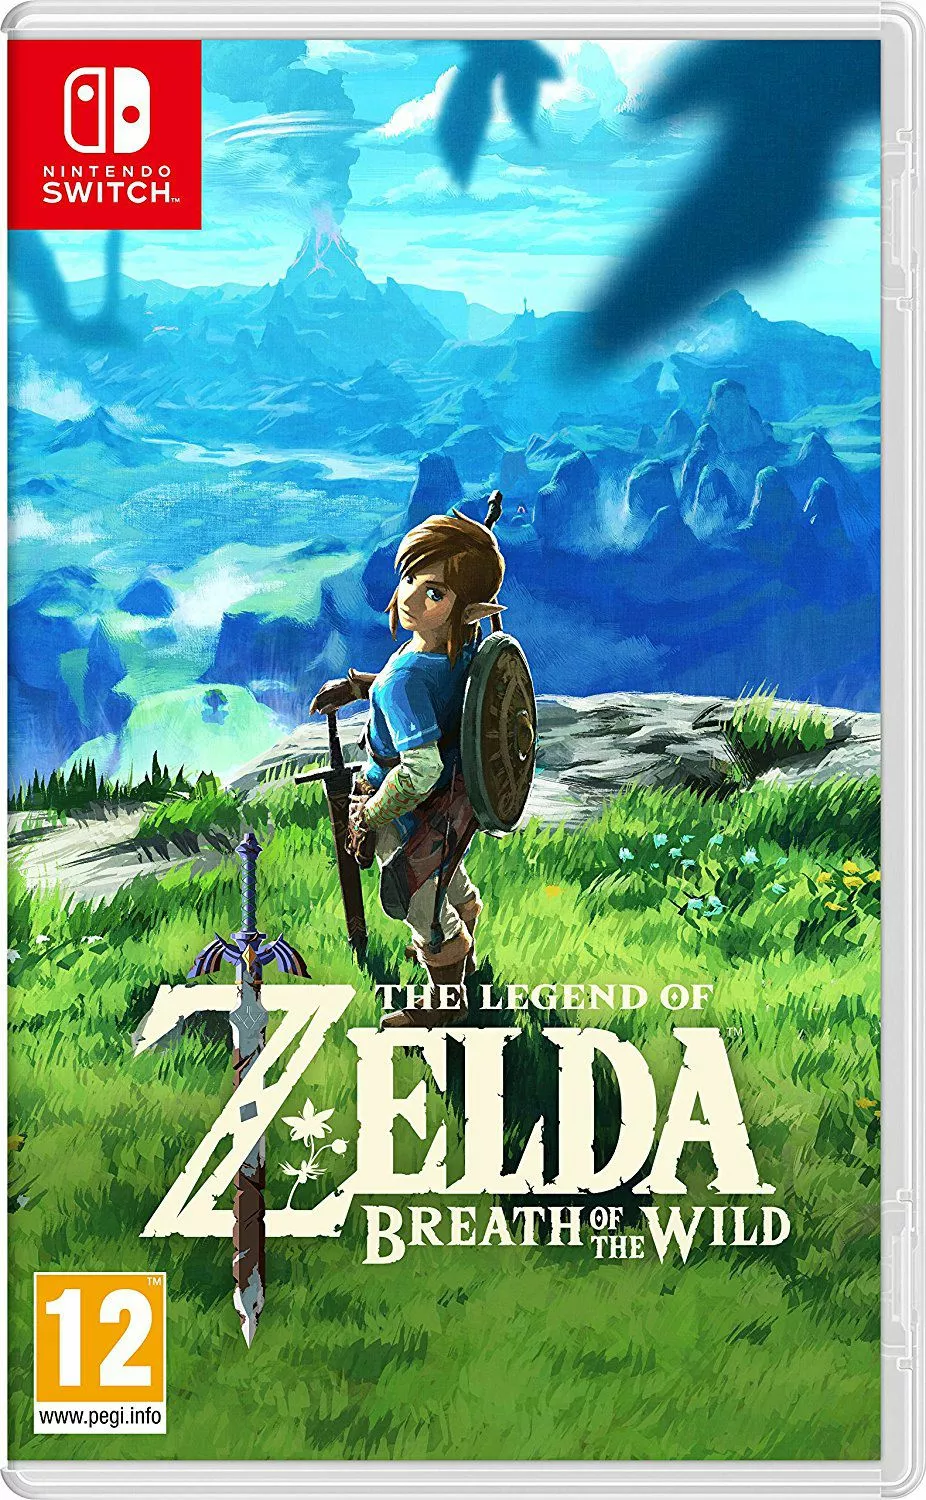 Nintendo Switch Zelda Breath of the Wild.